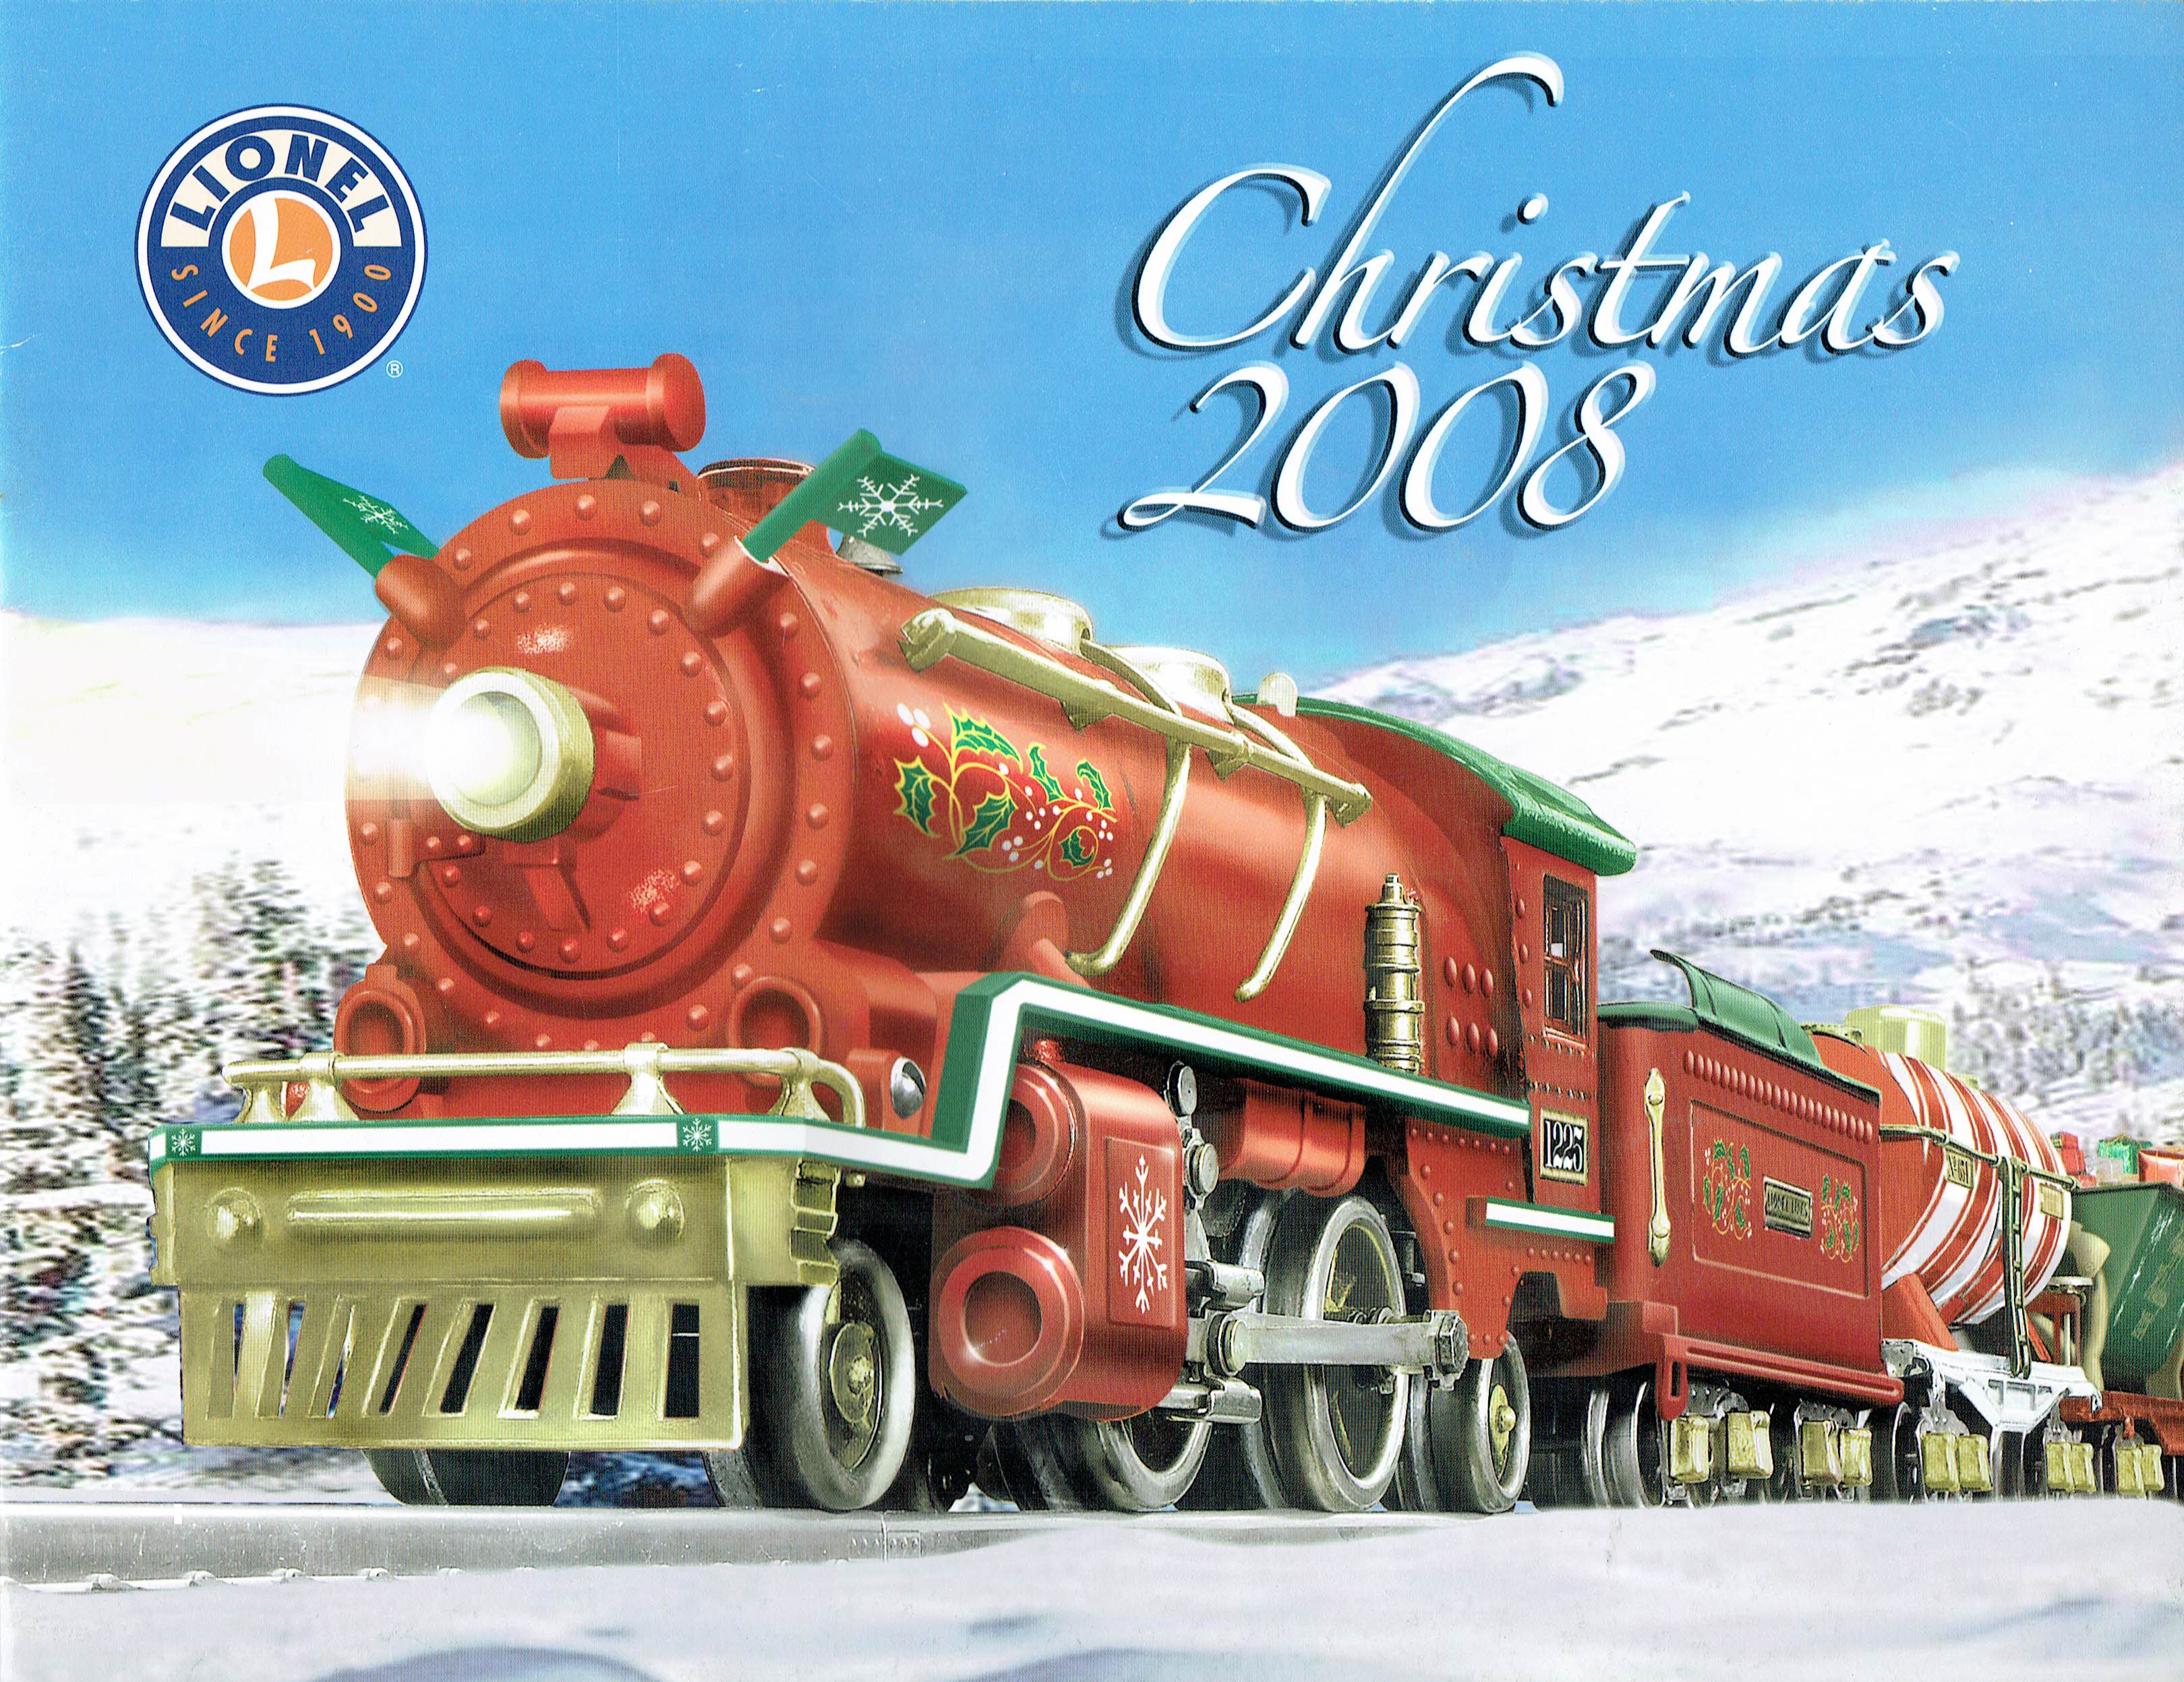 Lionel 2008 Christmas Catalog image